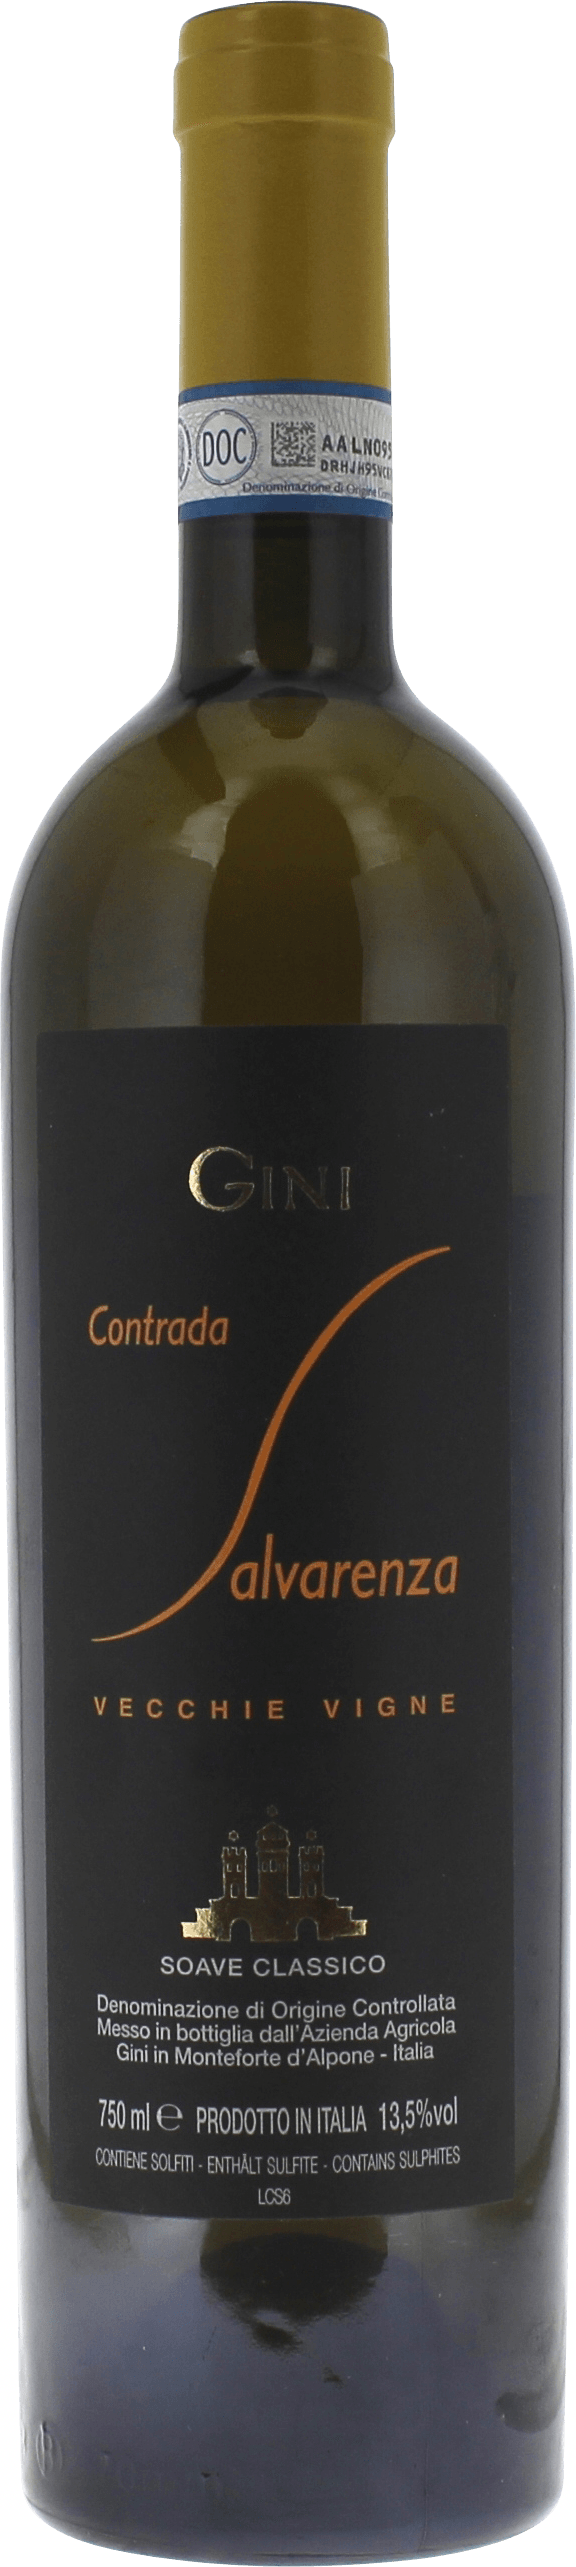 Gini - contrada salvarenza garganega - soave classico 2014  , Vin italien